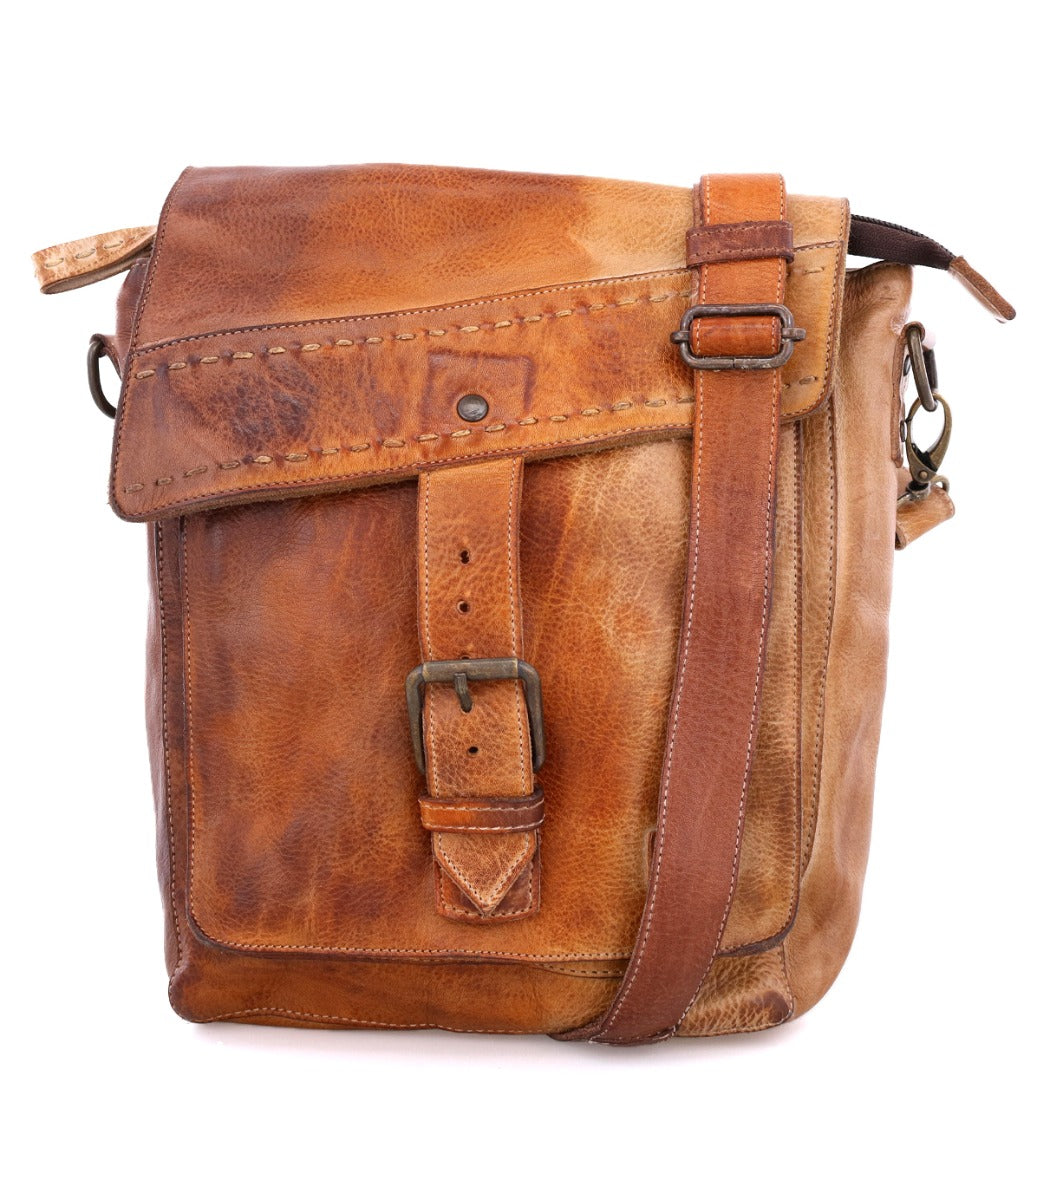 A Bed Stu Ainhoa brown leather crossbody handbag with an adjustable strap.